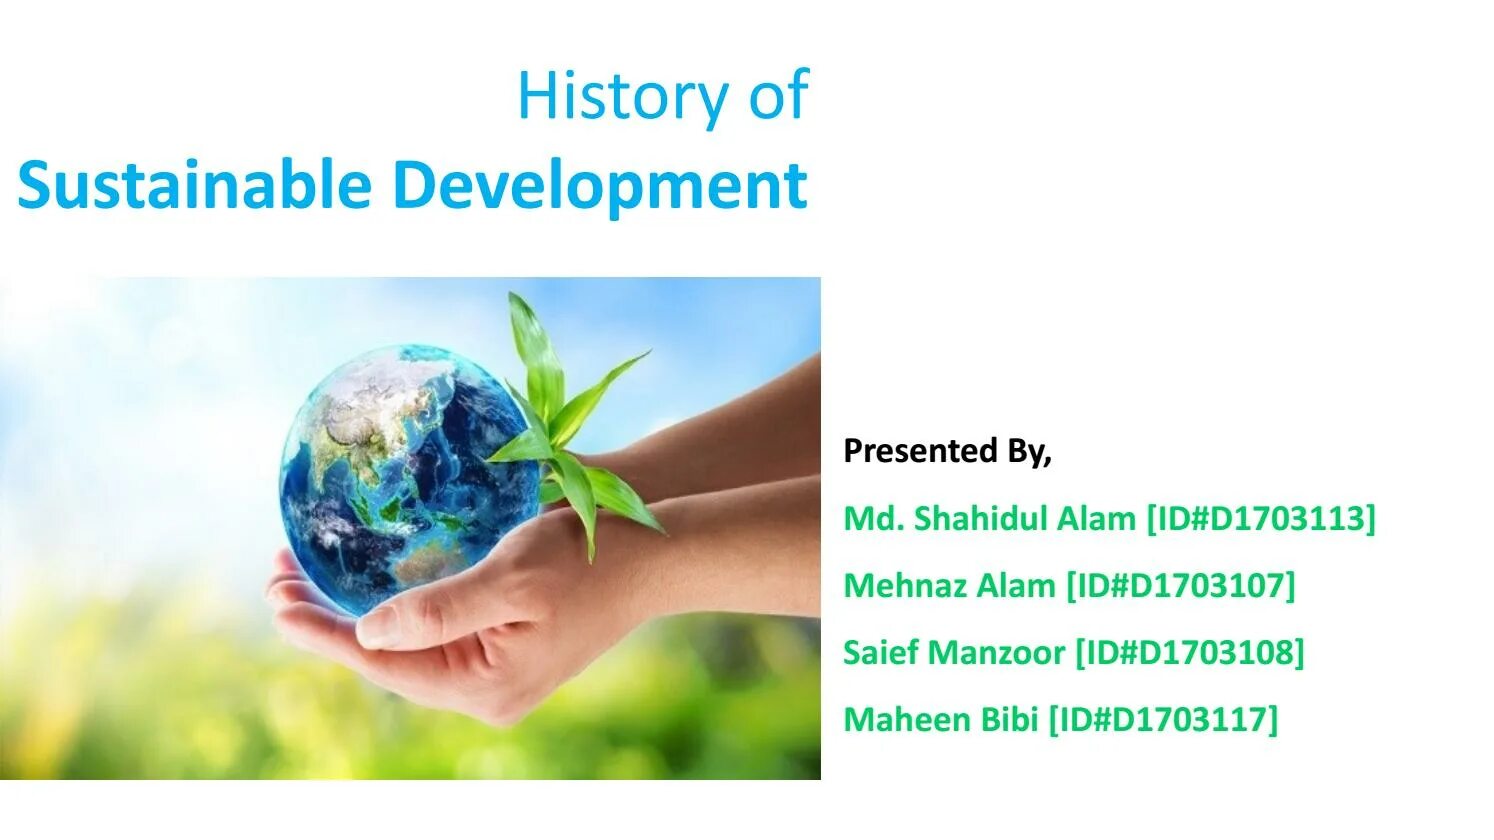 Sustainable Development. Sustainable Development Issue. Sustainable Development Definition. Sustainable Development images.